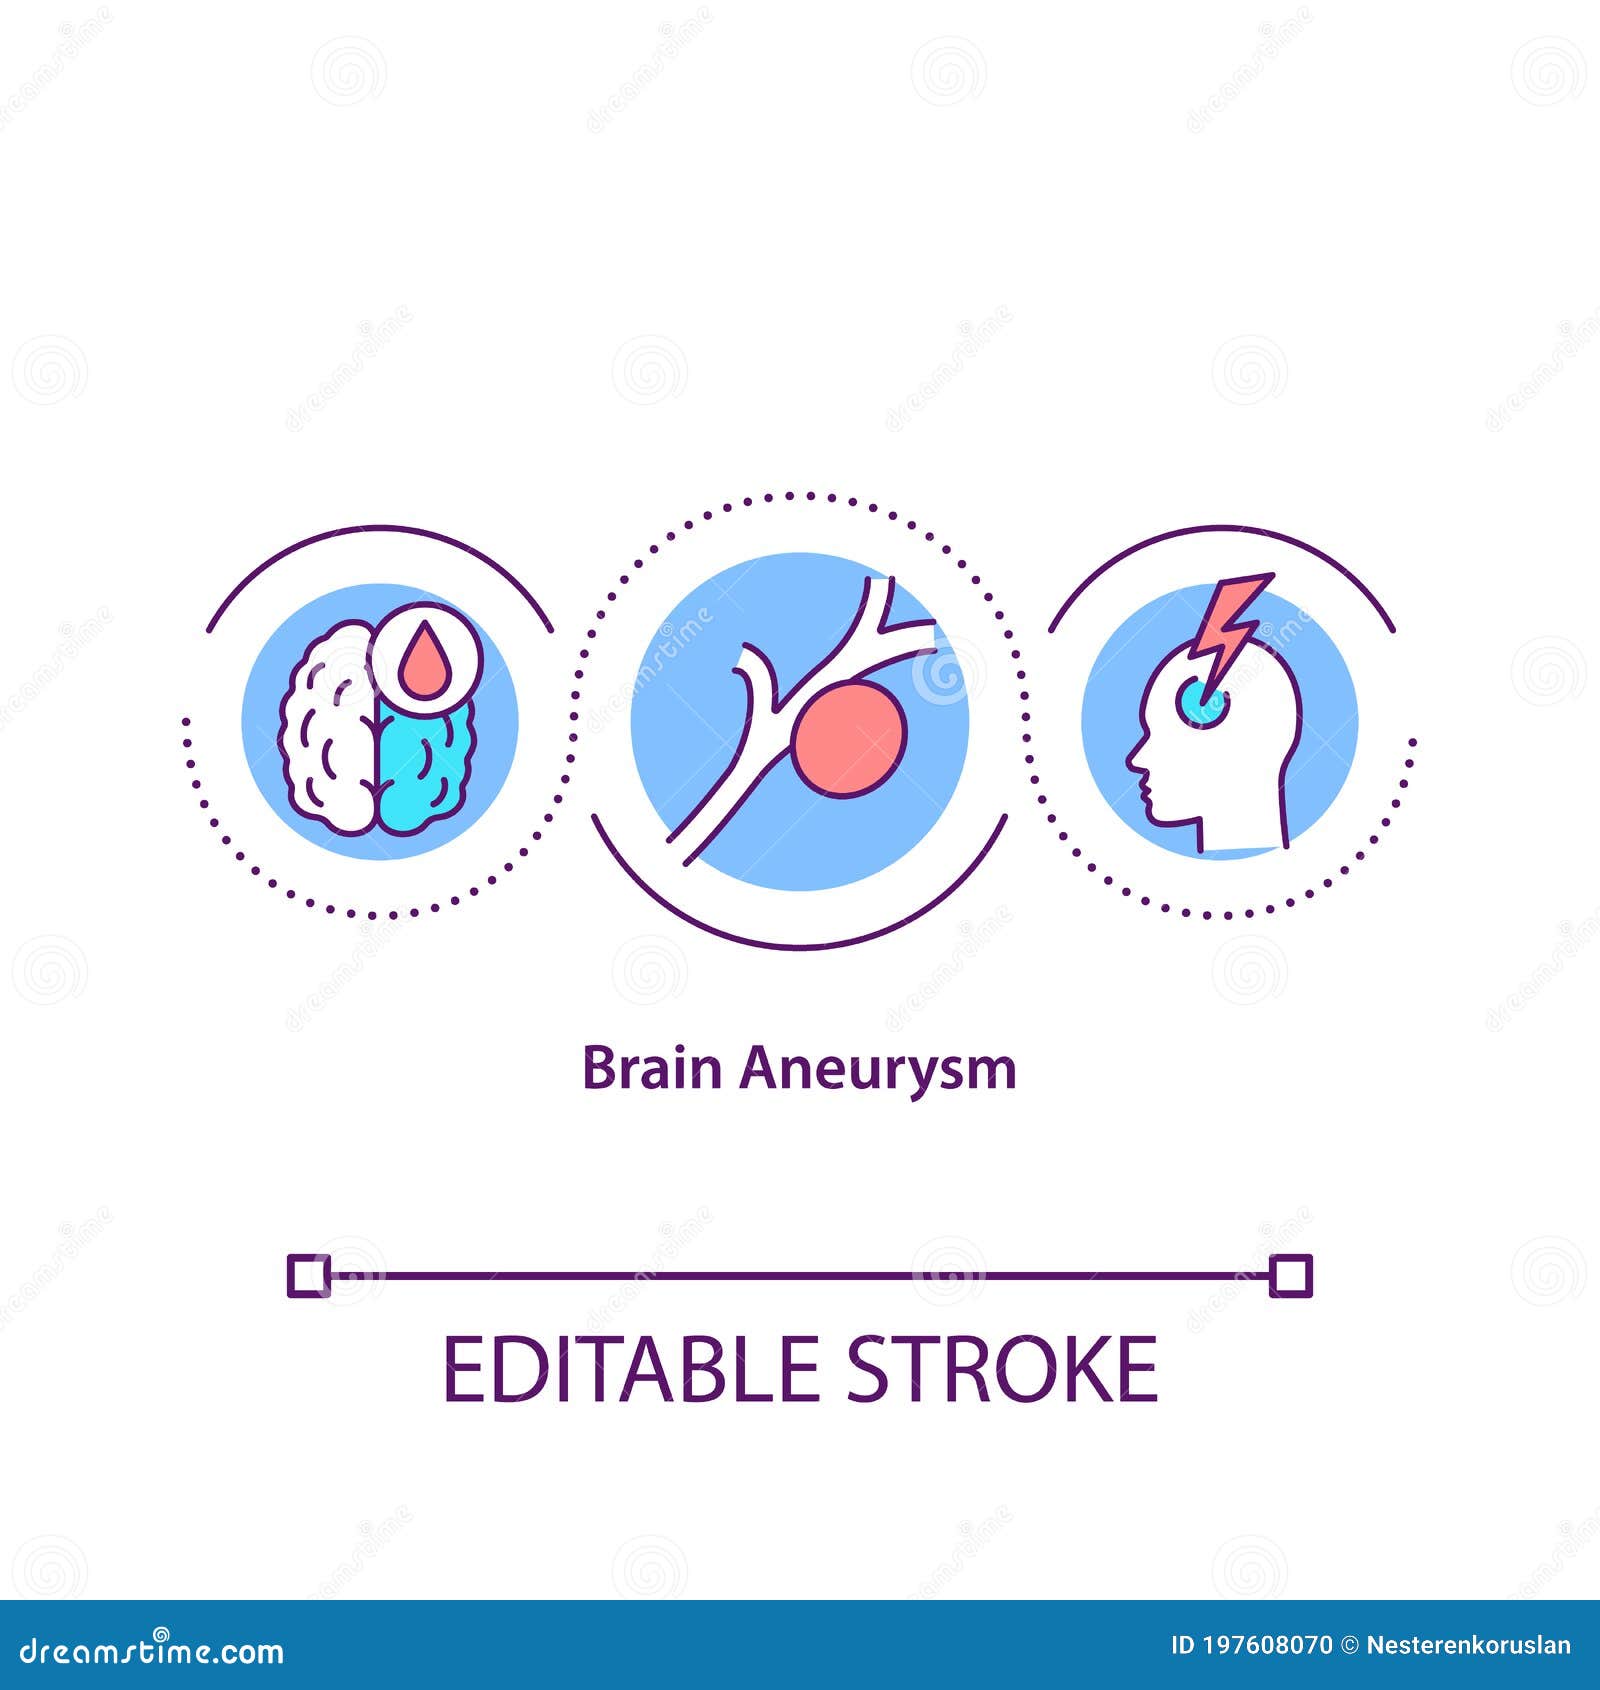 brain aneurysm concept icon